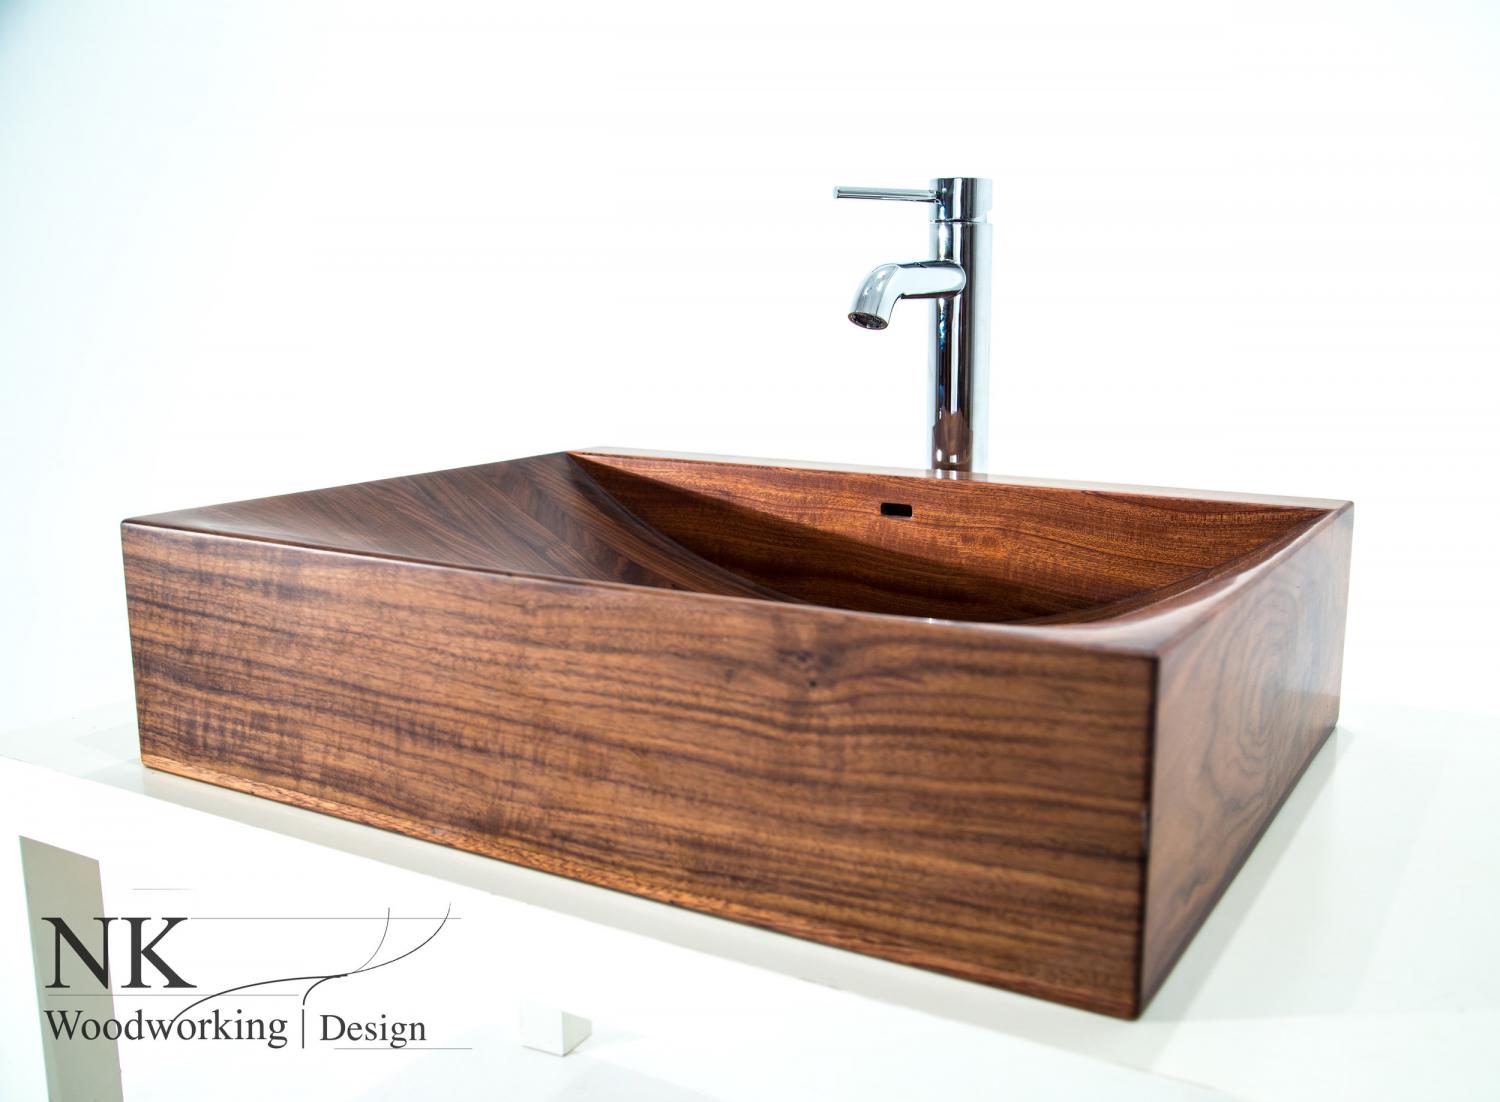 Luxurious Wooden Bathtubs - Shipbuilder wooden bathtubs inspired from ships - NK Woodworking Design